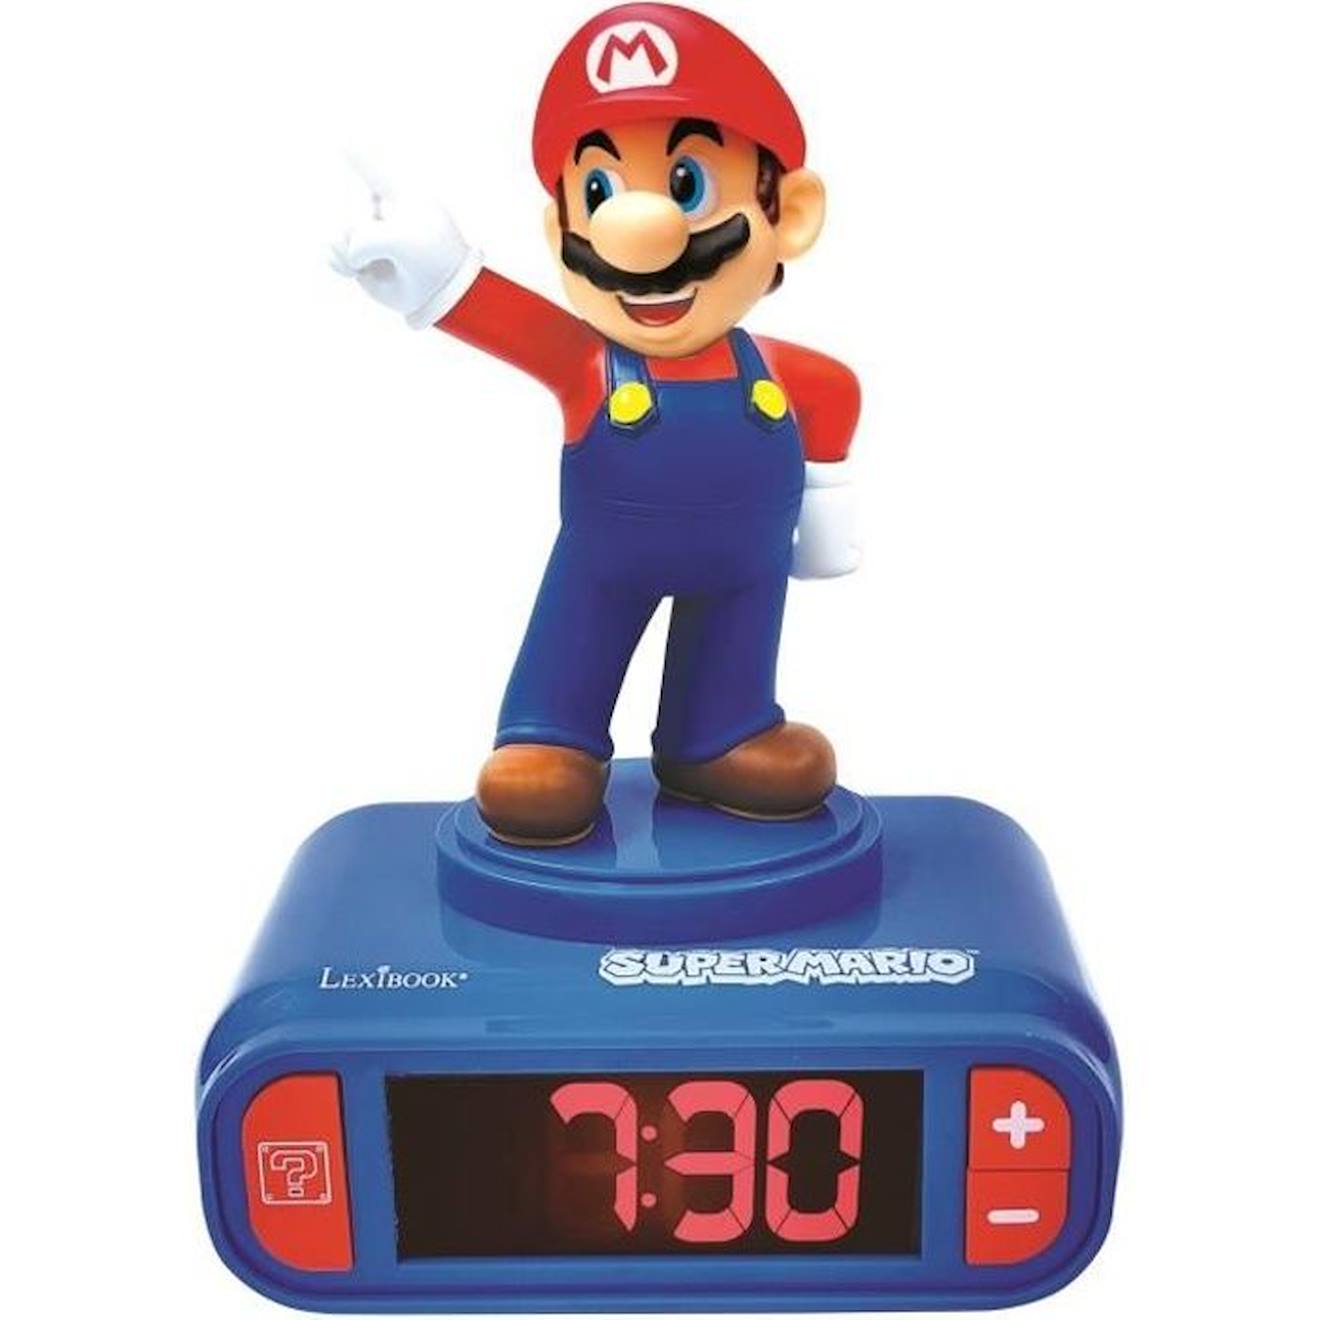 Super Mario - Réveil Digital Avec Veilleuse Lumineuse En 3d Et Effets Sonores - Lexibook Bleu